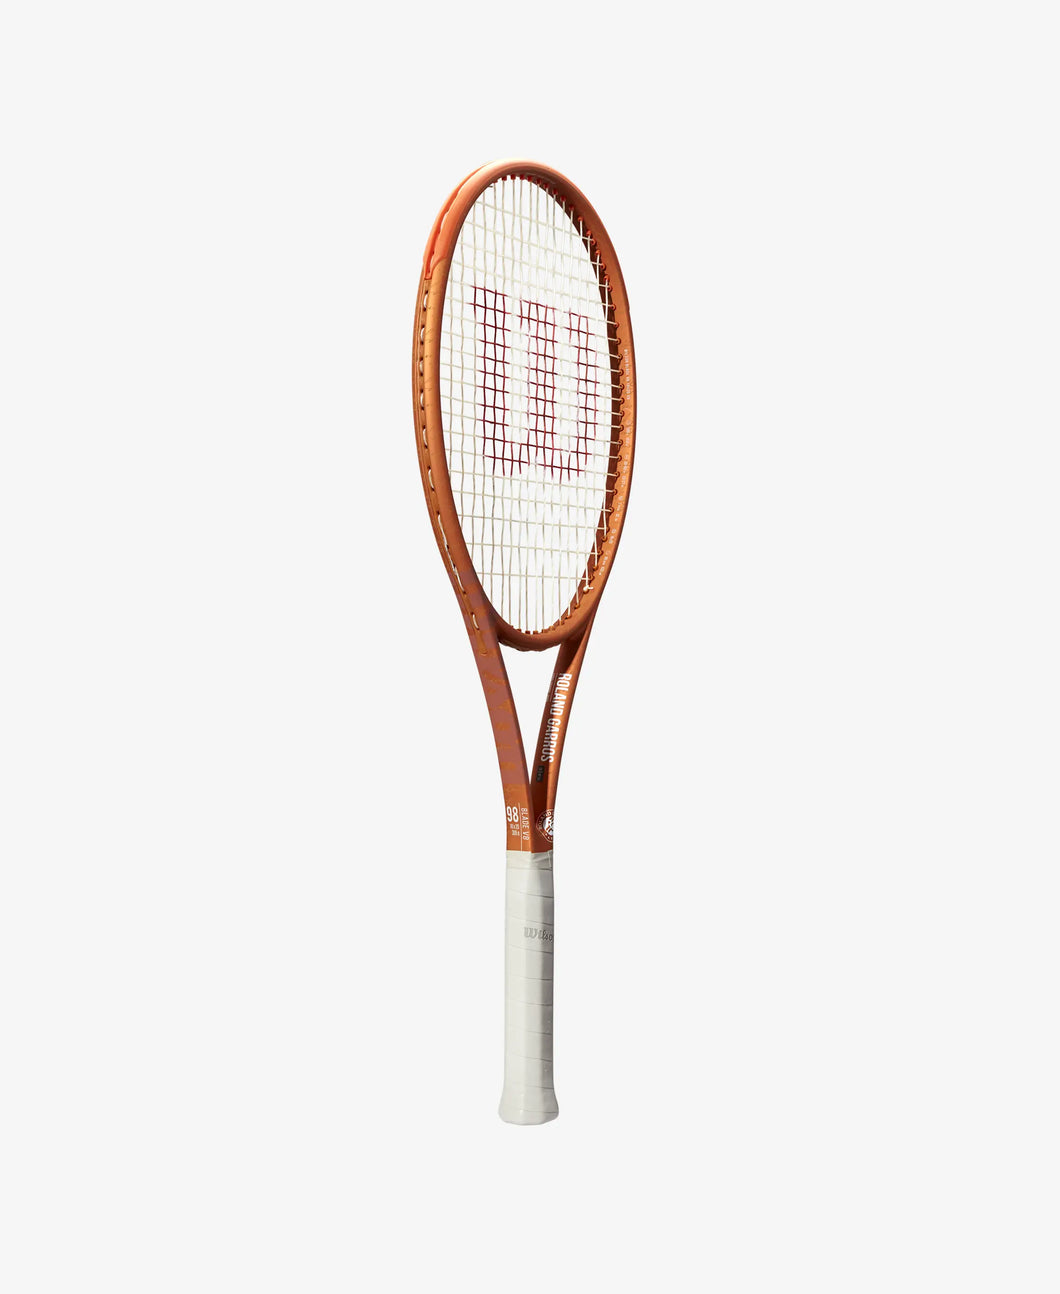 Wilson x Roland Garros Blade 98 v8 (305g) racket - Clay Limited